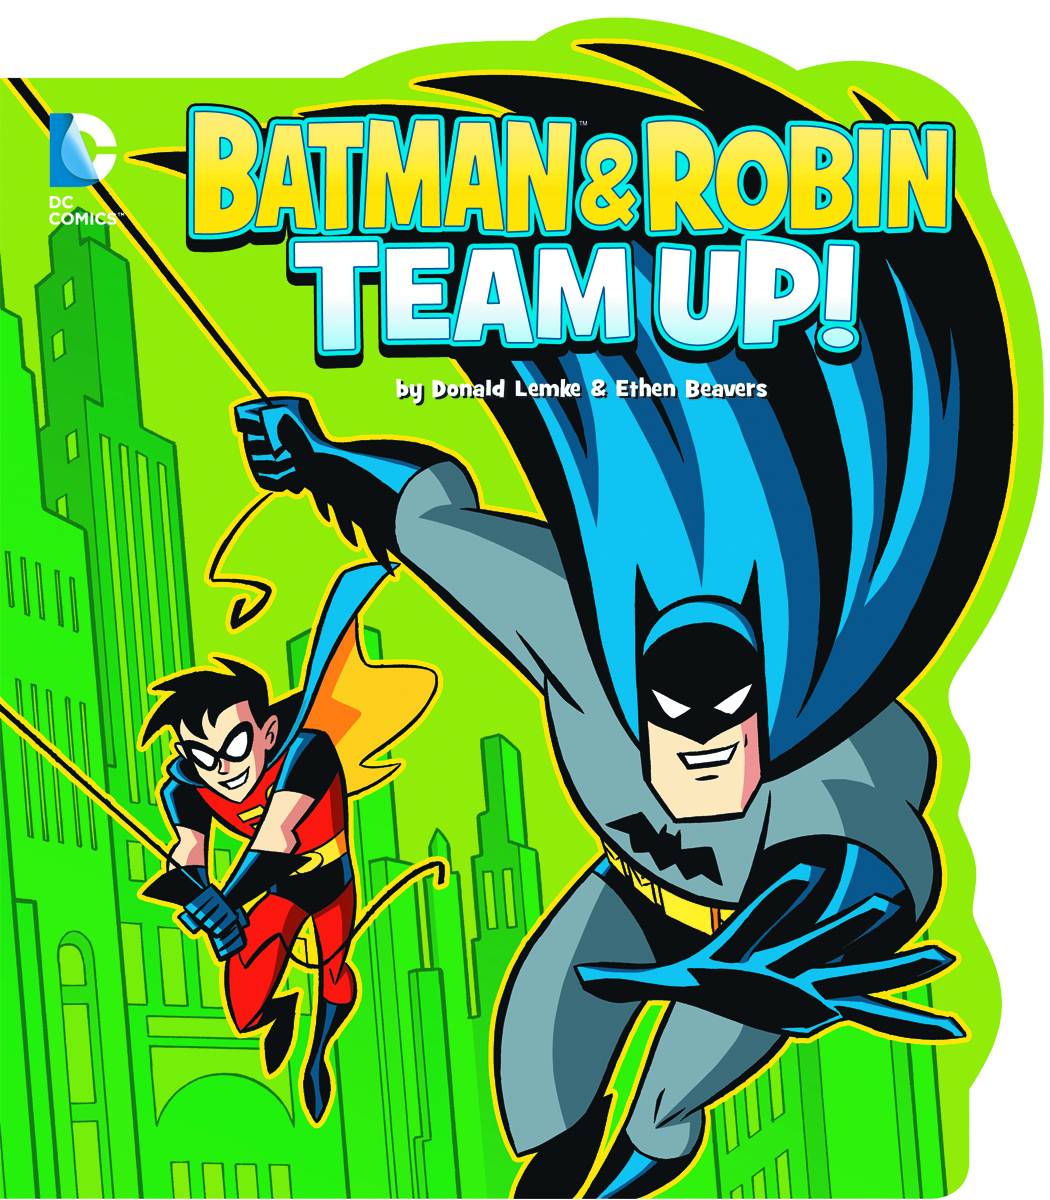 DC YR BOARD BOOK BATMAN & ROBIN TEAM UP